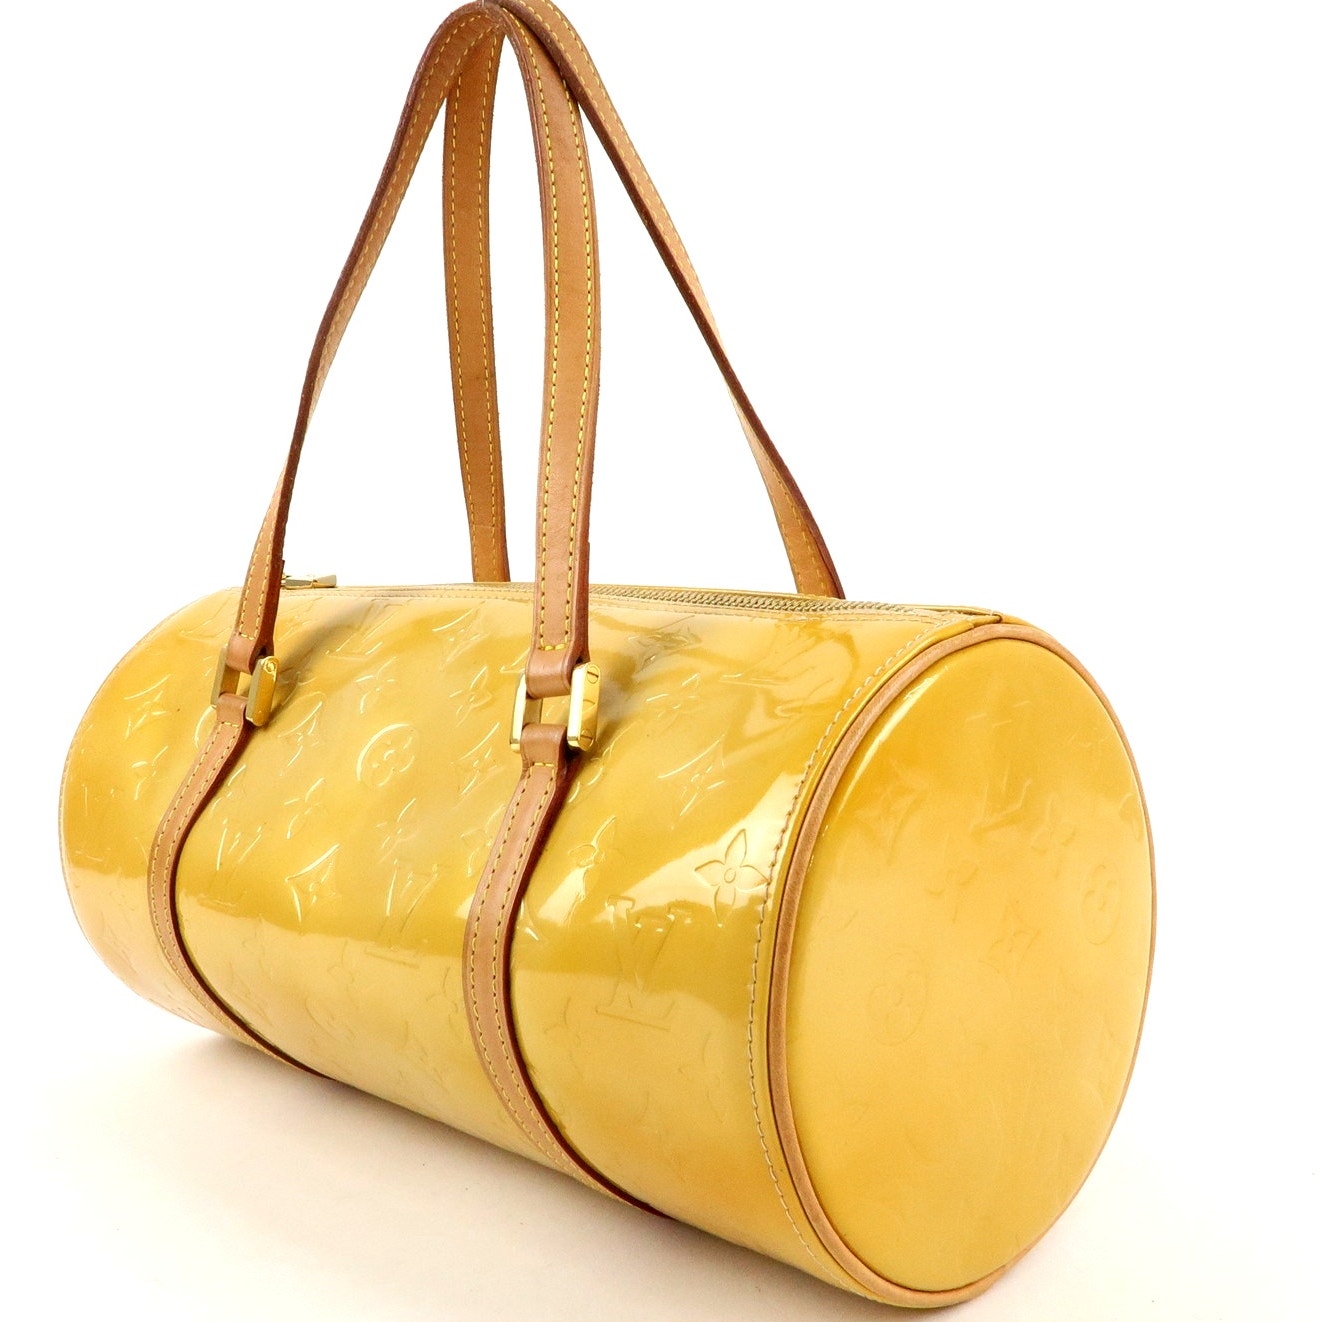 Authentic Louis Vuitton Monogram Vernis Bedford Handbag